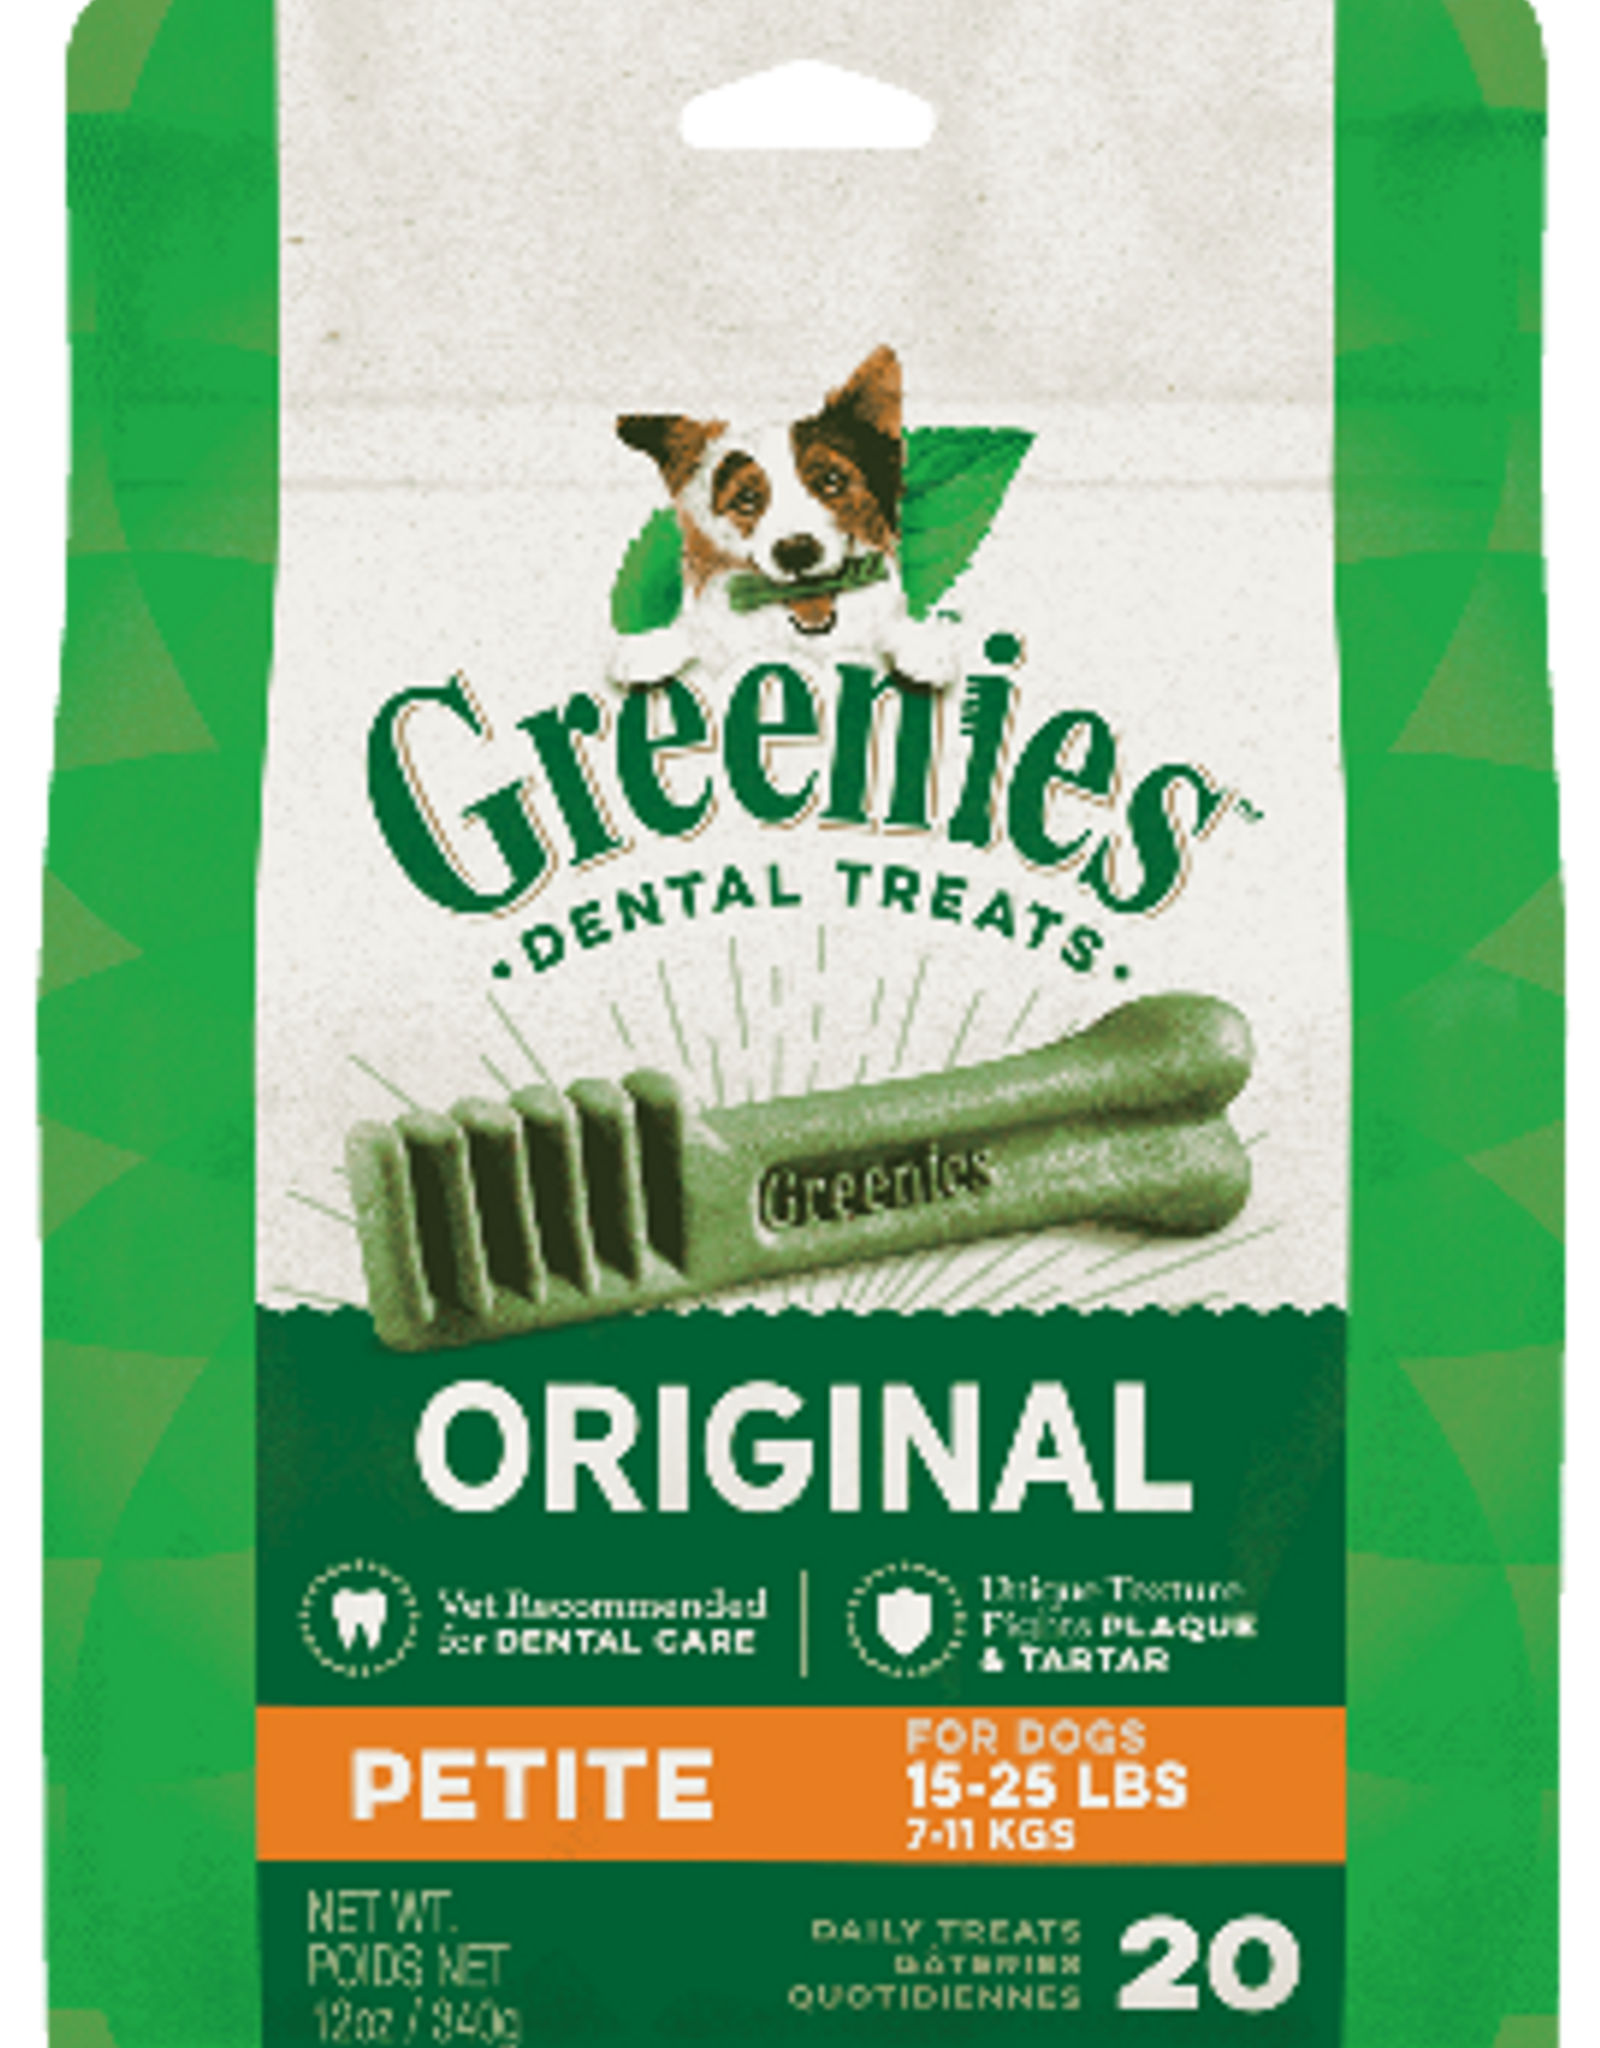 MARS PETCARE-GREENIES Greenies DOG Dental Treat PETITE 12oz 20PK